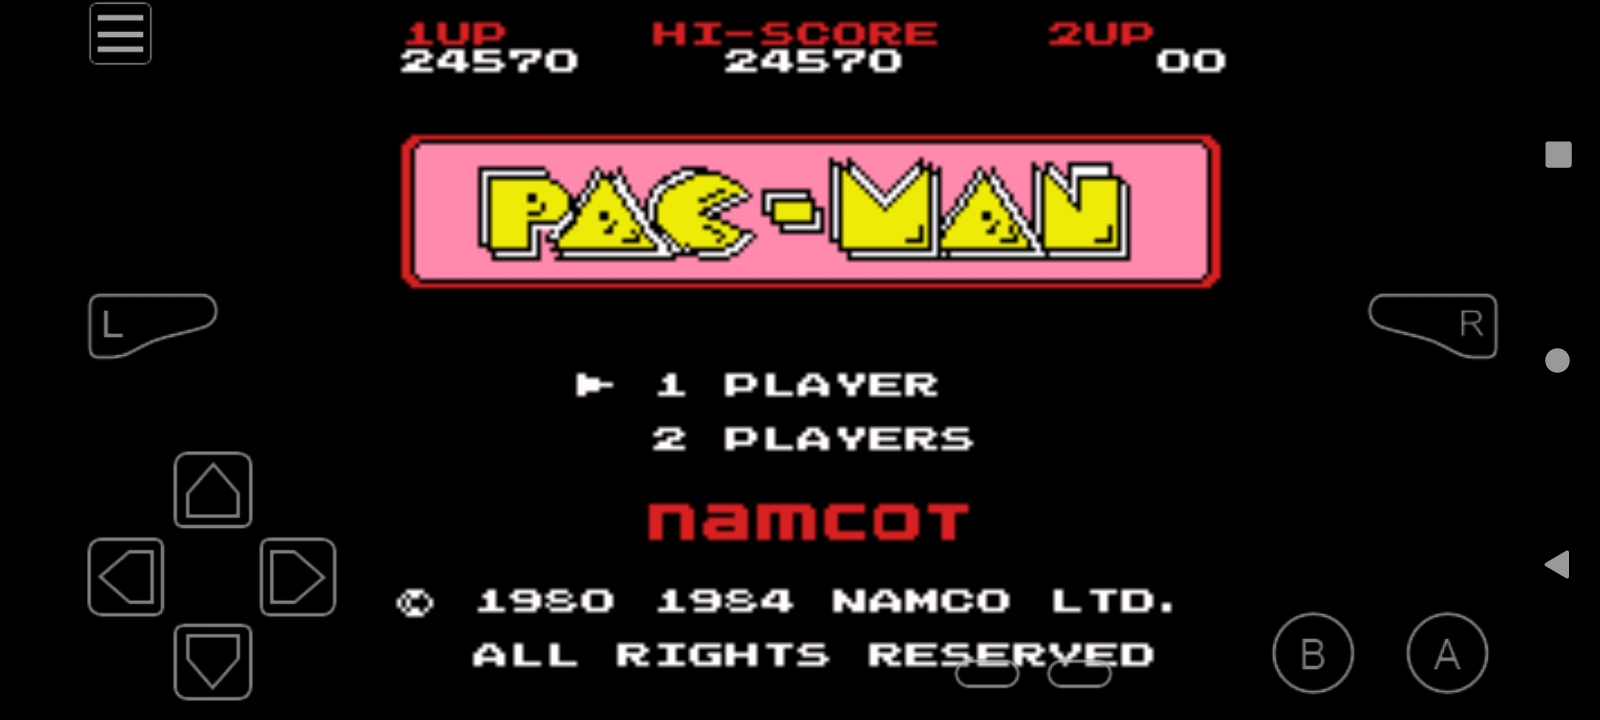 Hauntedprogram: Famicom Mini Vol. 6: Pac-Man (GBA Emulated) 24,570 points on 2022-08-12 20:16:18